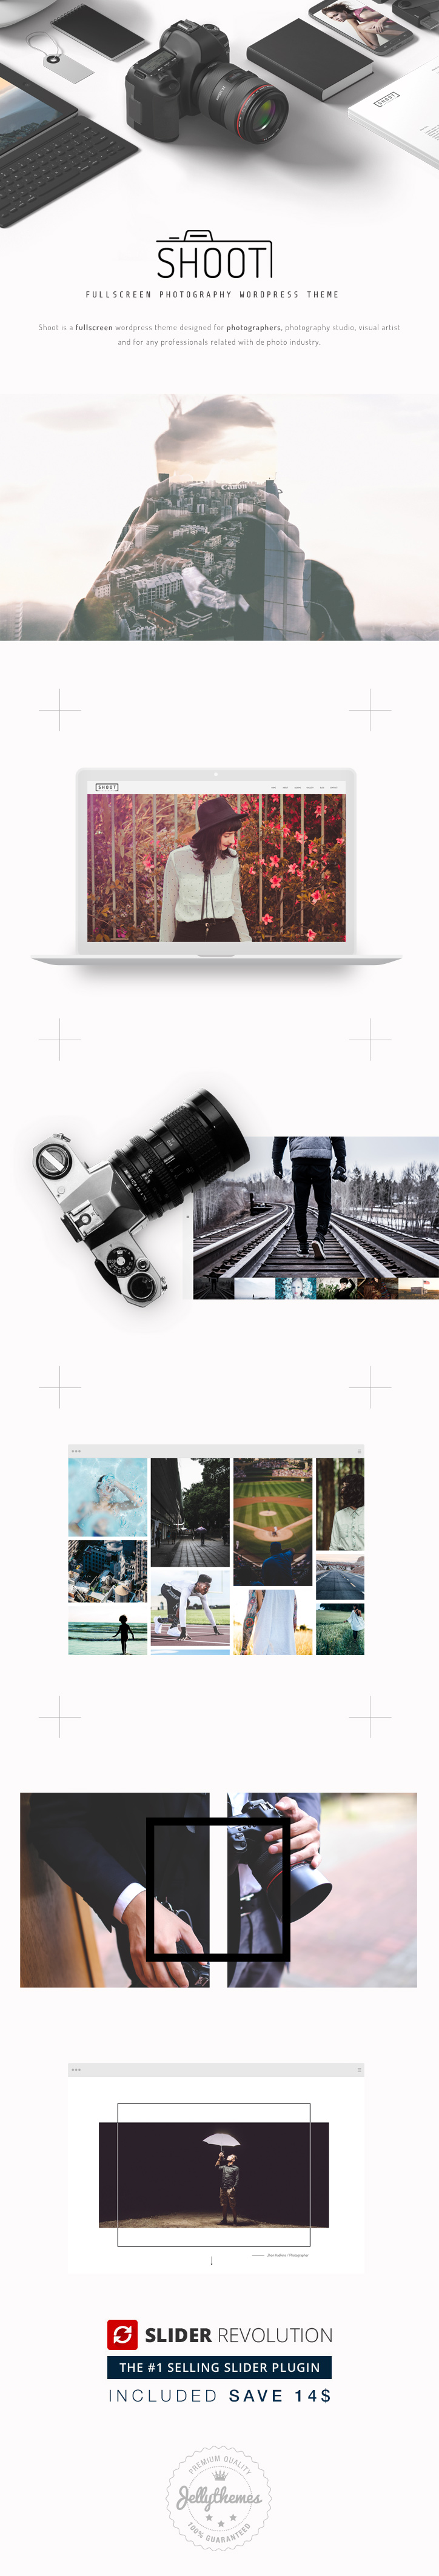 Shoot - Fullscreen Photography WordPress Theme - 1